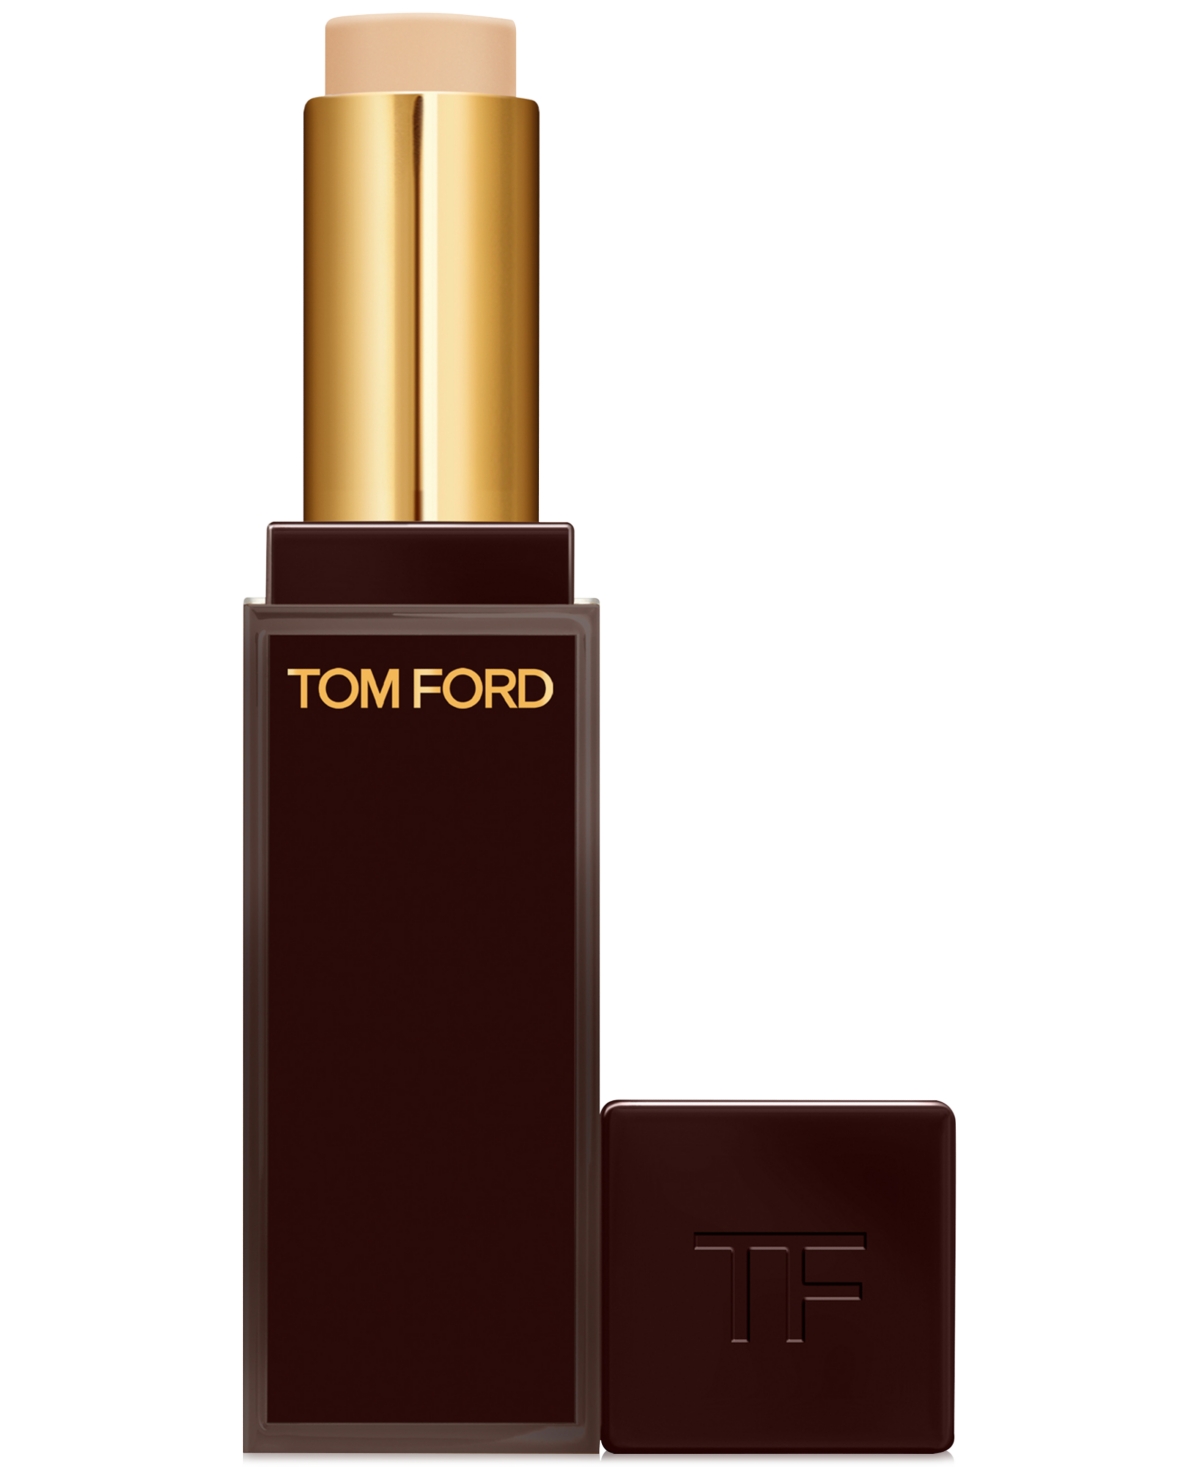 Tom Ford Traceless Soft Matte Concealer In N Crème (light-medium Skin With Neutral 